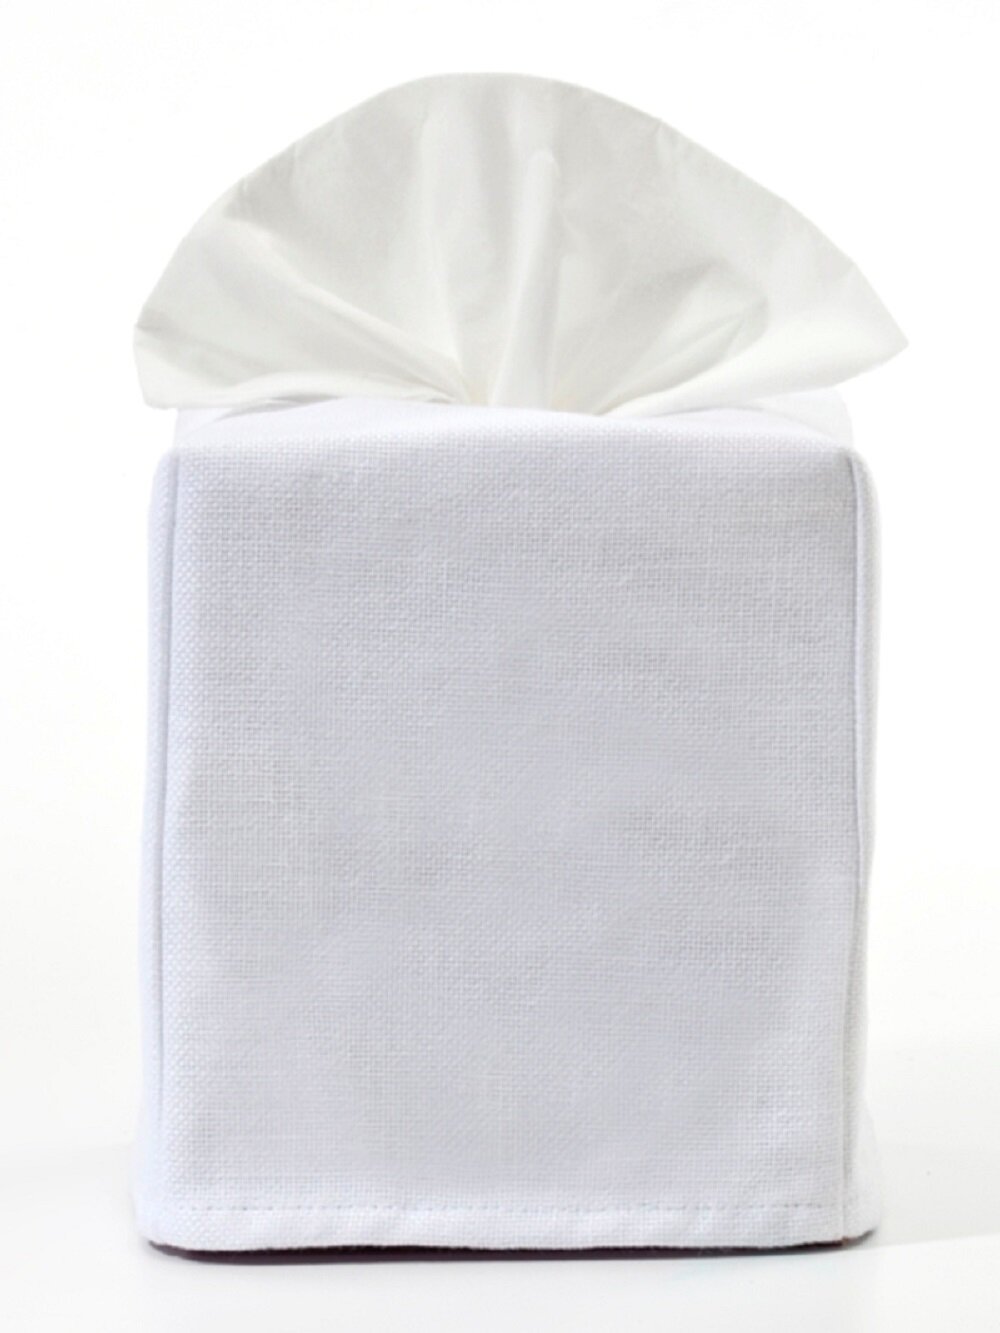 linen tissue box cover